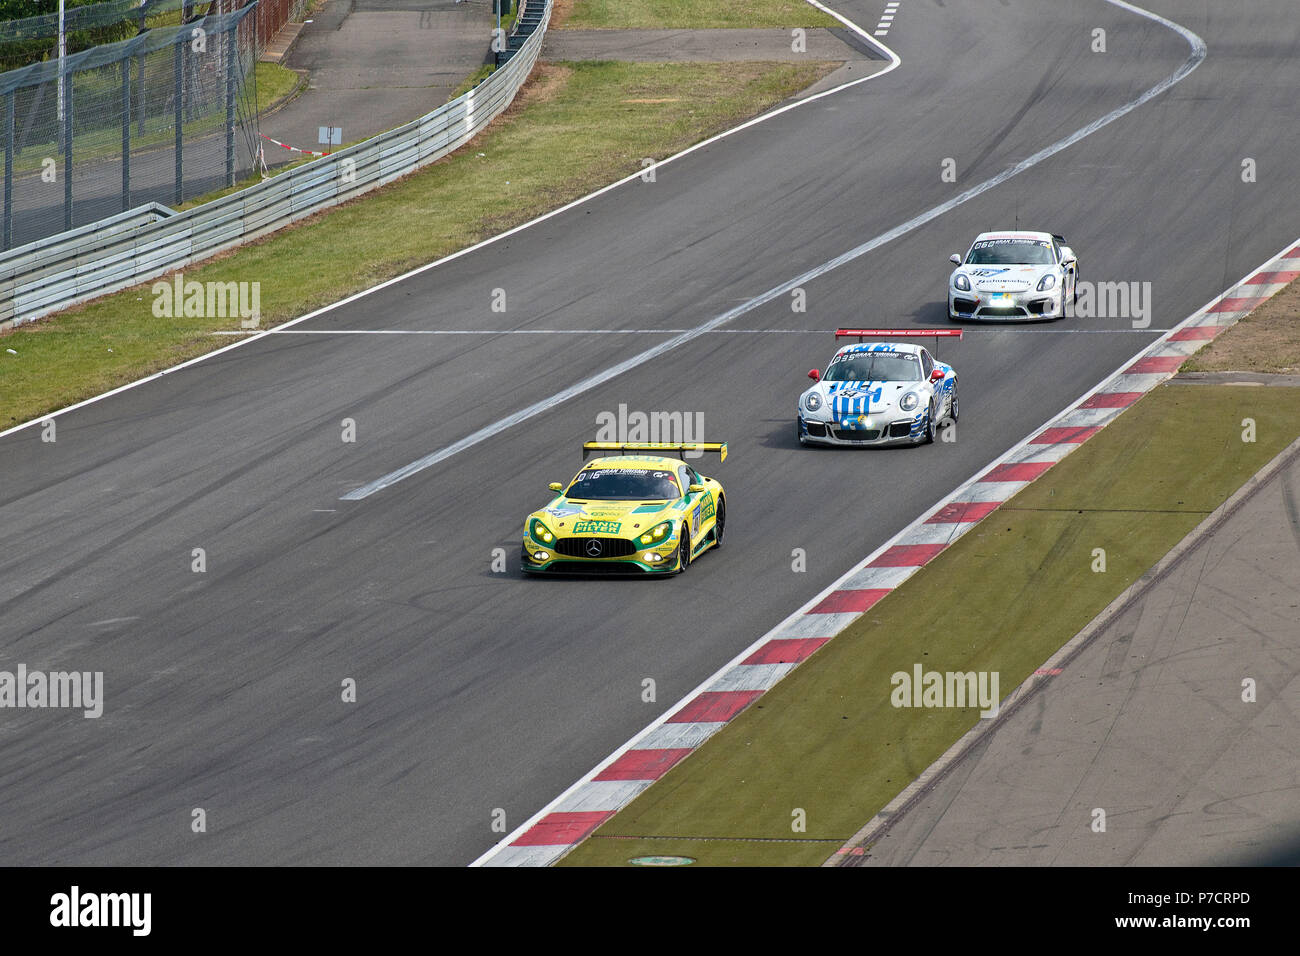 La Mercedes-AMG GT3 seguita dalla Porsche 911 GT3, Nuerburgring 24h gara 2017, lunga distanza in gara, Eifel, Renania-Palatinato, Germania, Europa Foto Stock